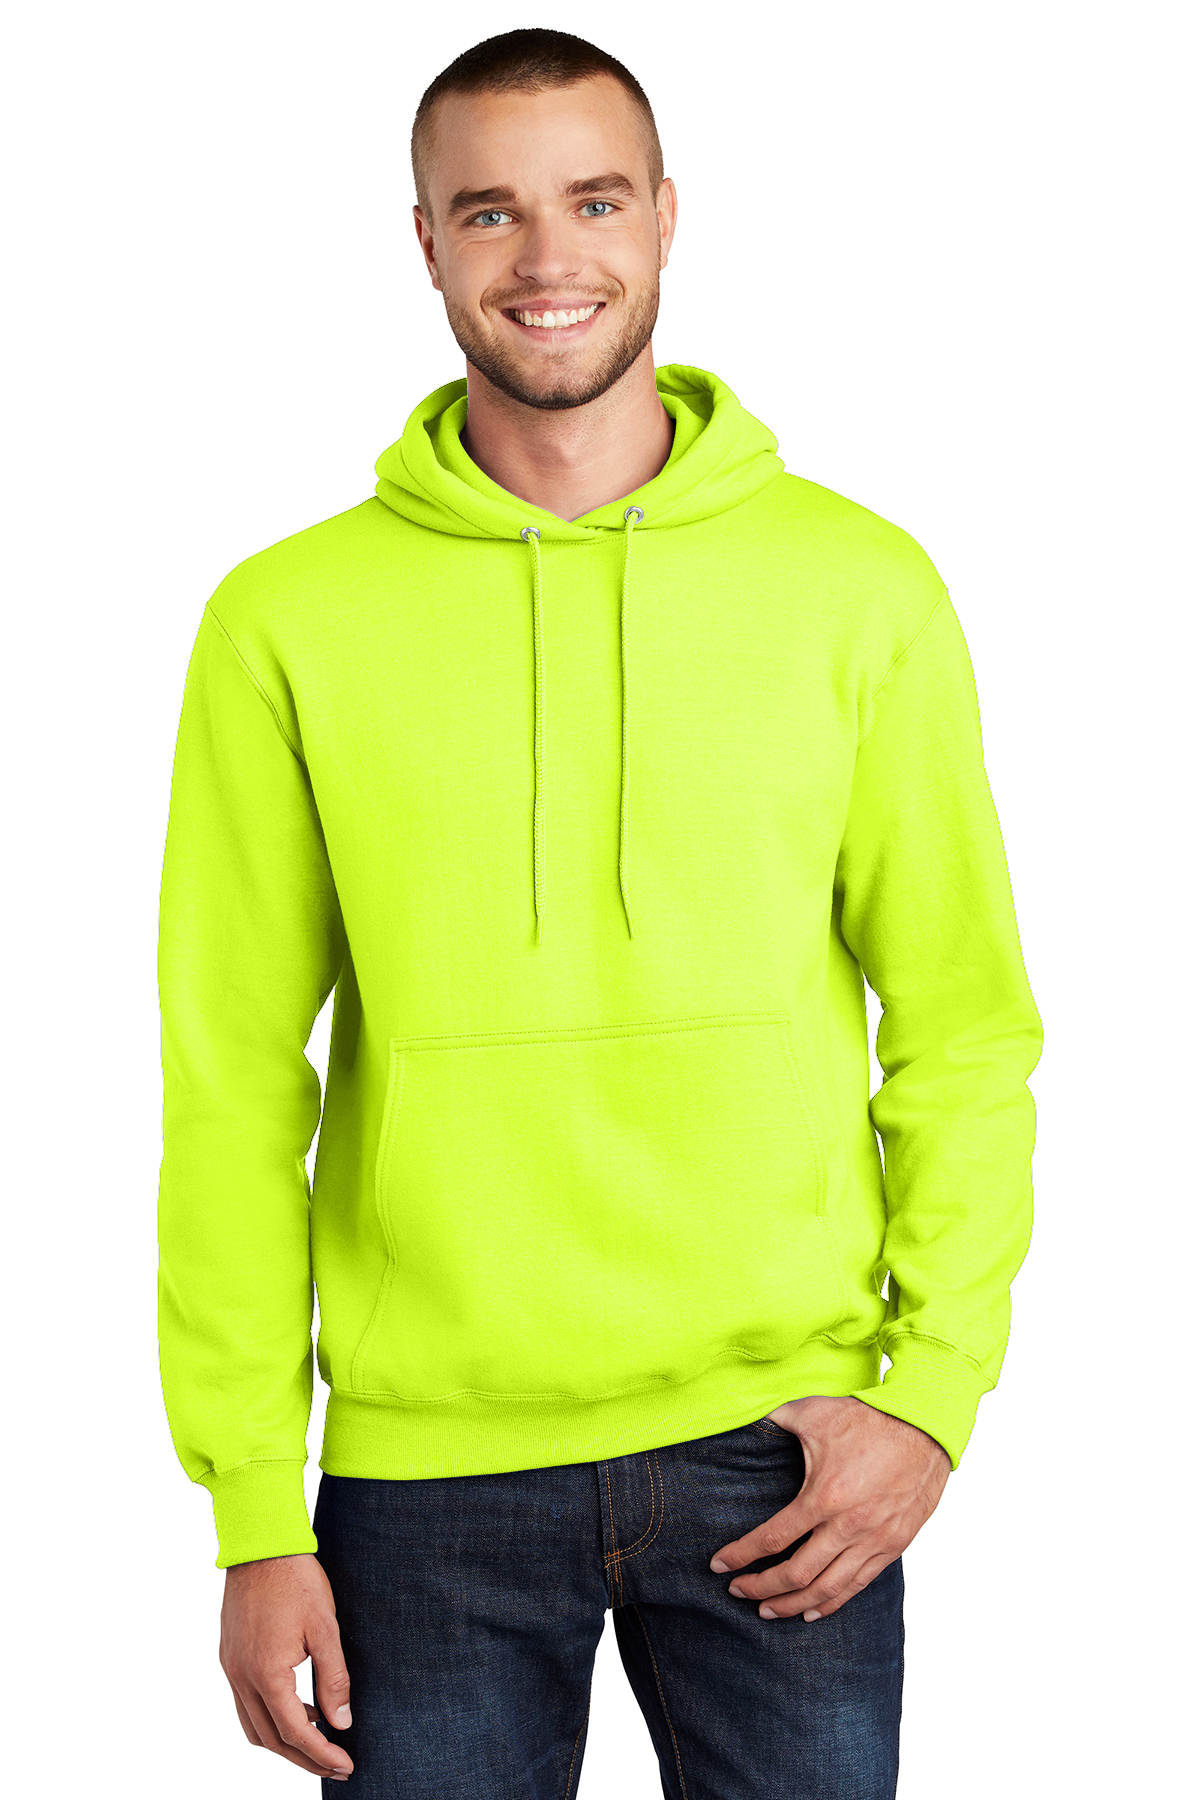 DENIM sweatshirt – by Green Cotton COM